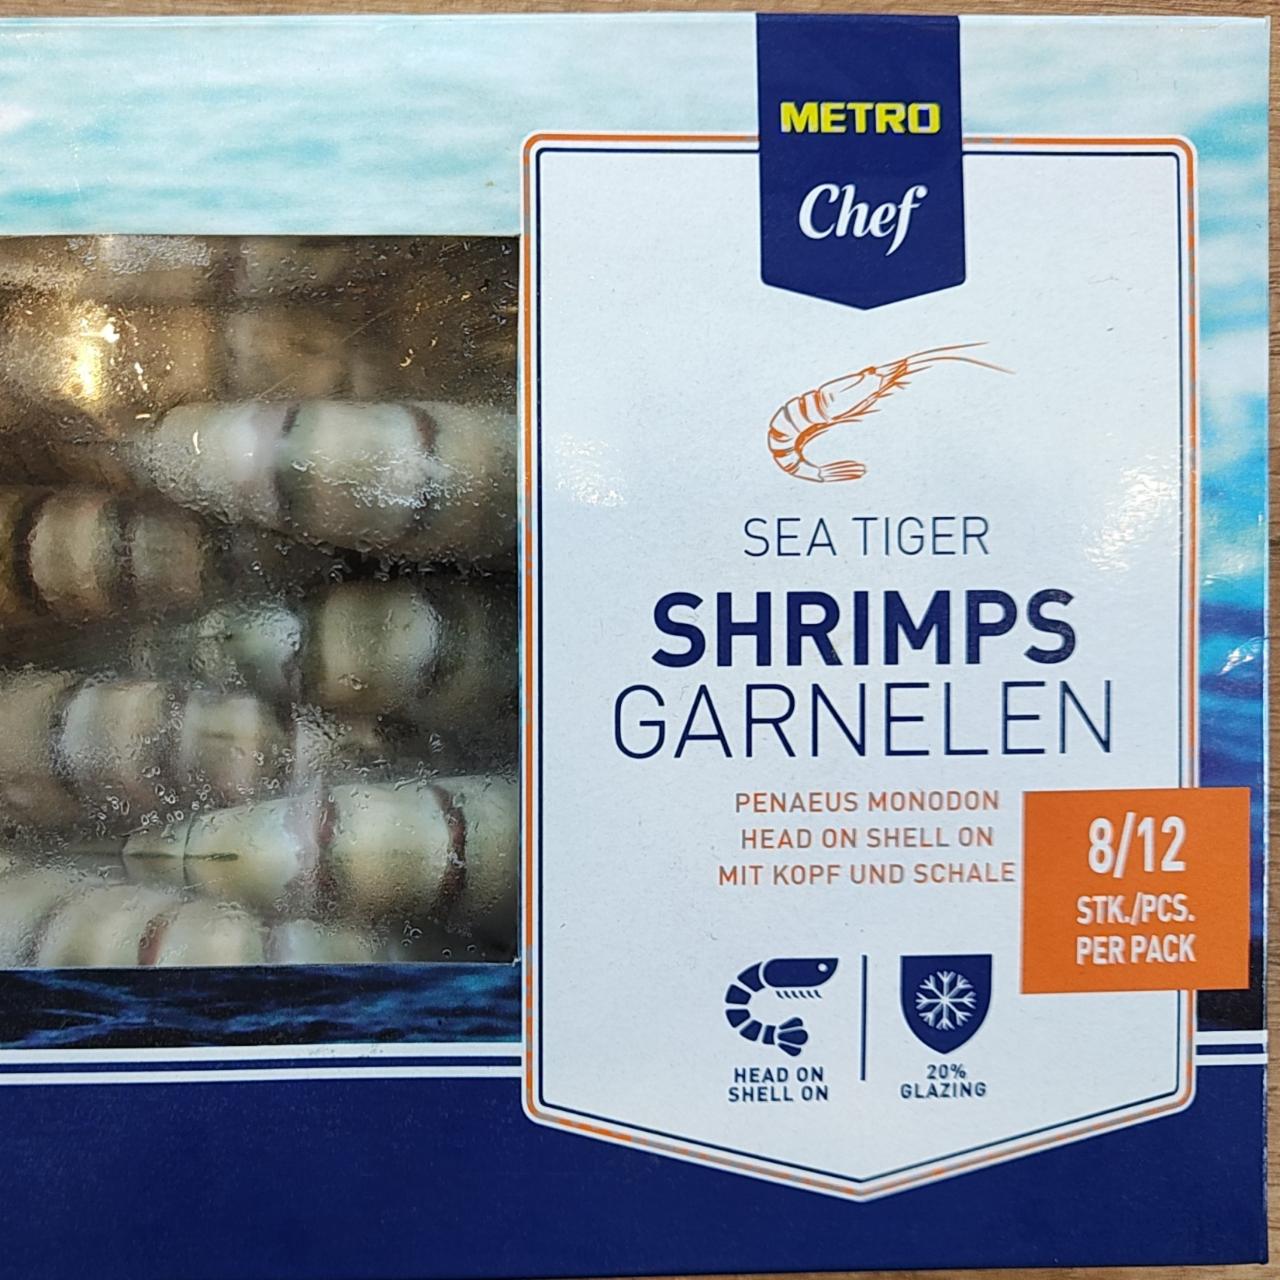 Fotografie - Sea Tiger Shrimps Garnelen 8/12 Metro Chef